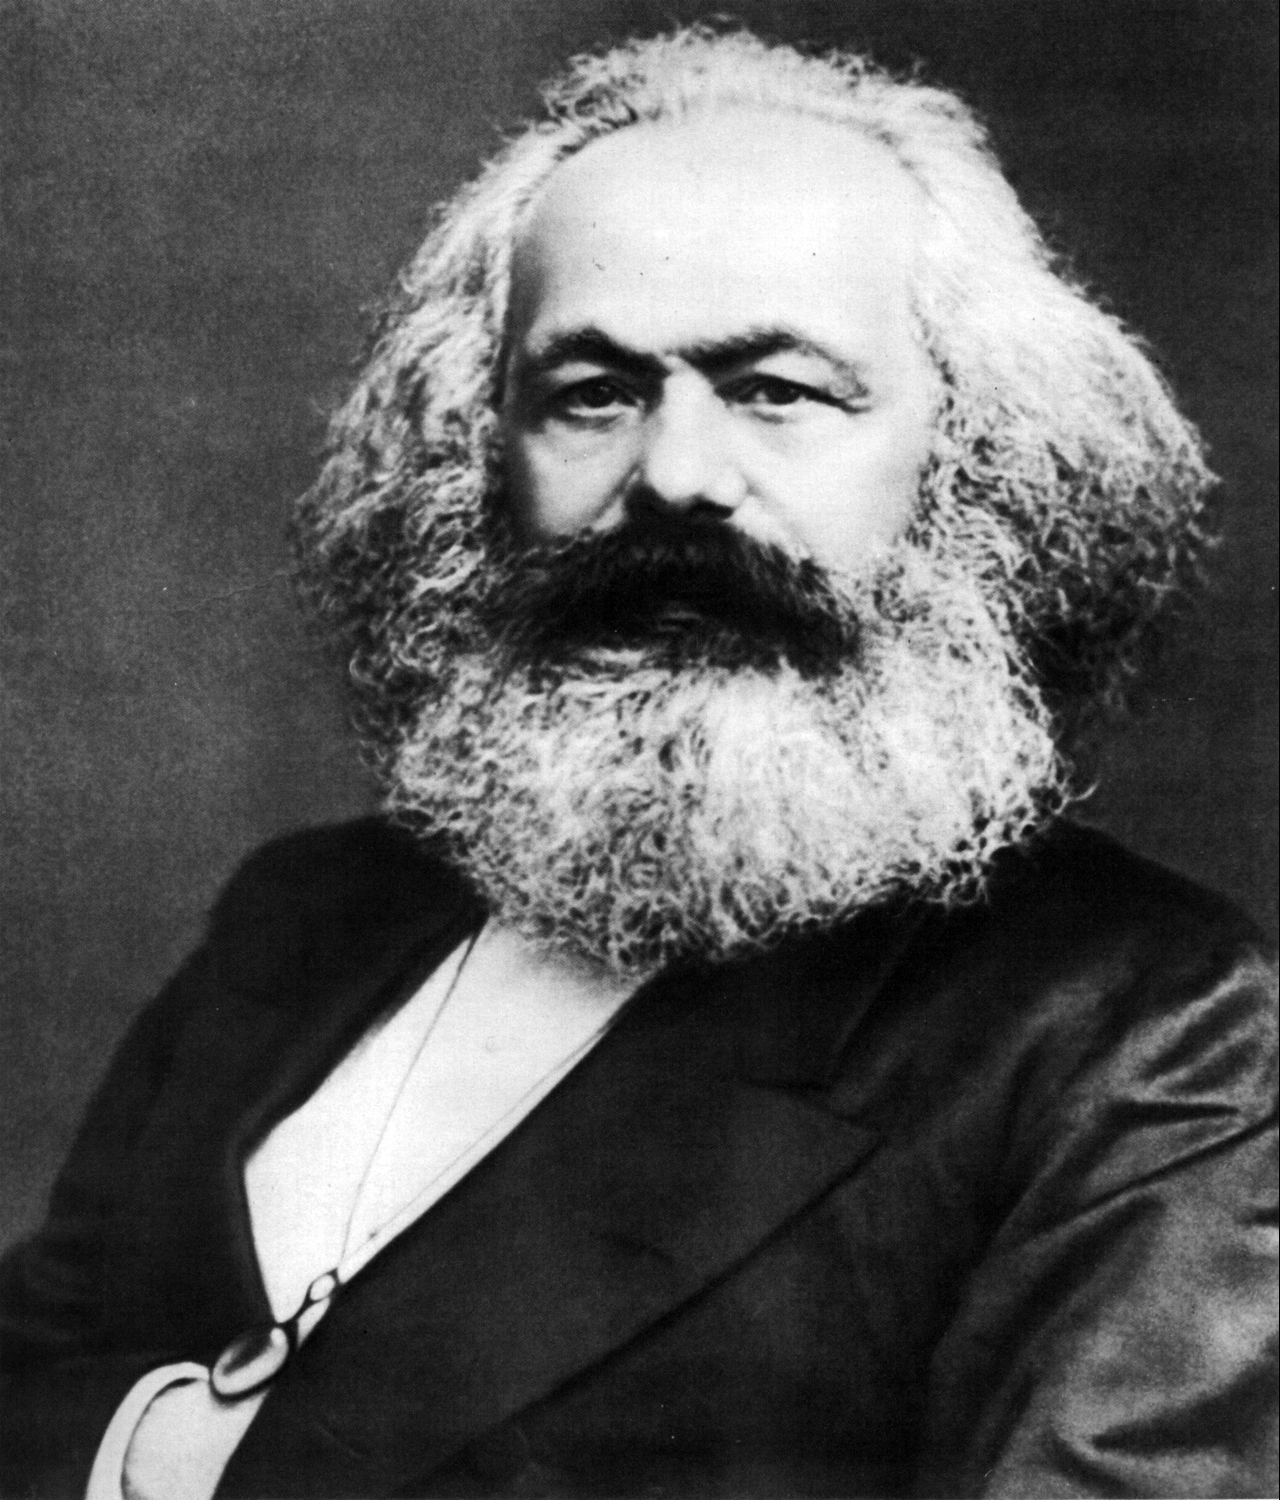 Retrato de Karl Marx. From: wikimedios.org